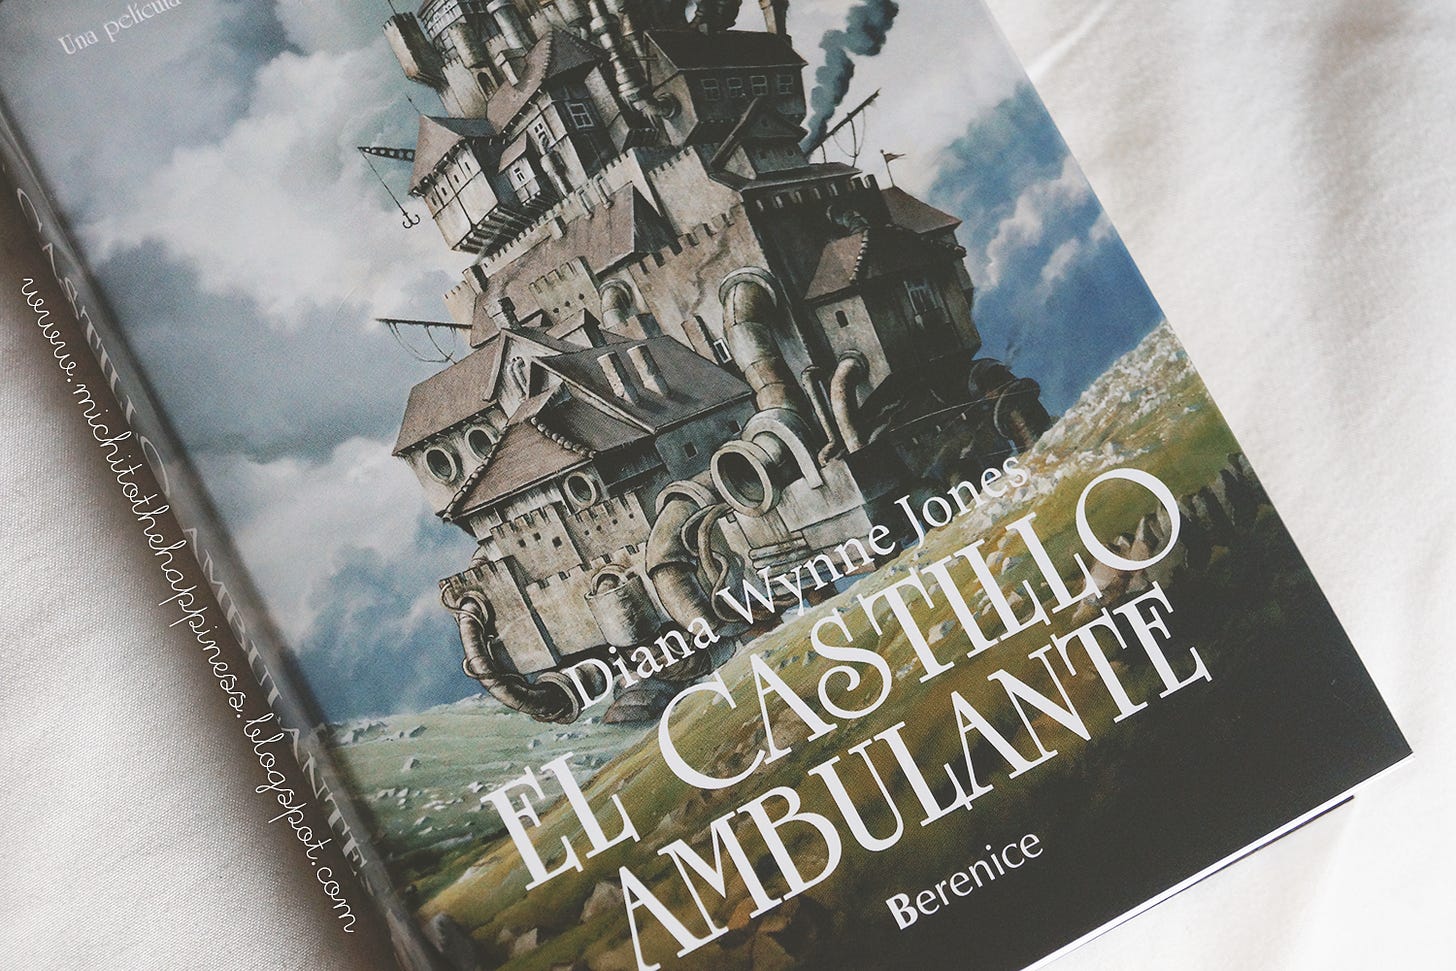 Libro/Anime ] El Castillo Ambulante ( DESCARGAR PDF / DESCARGAR ANIME ) |  Libros para leer juveniles, Libros populares, Libros para adolescentes